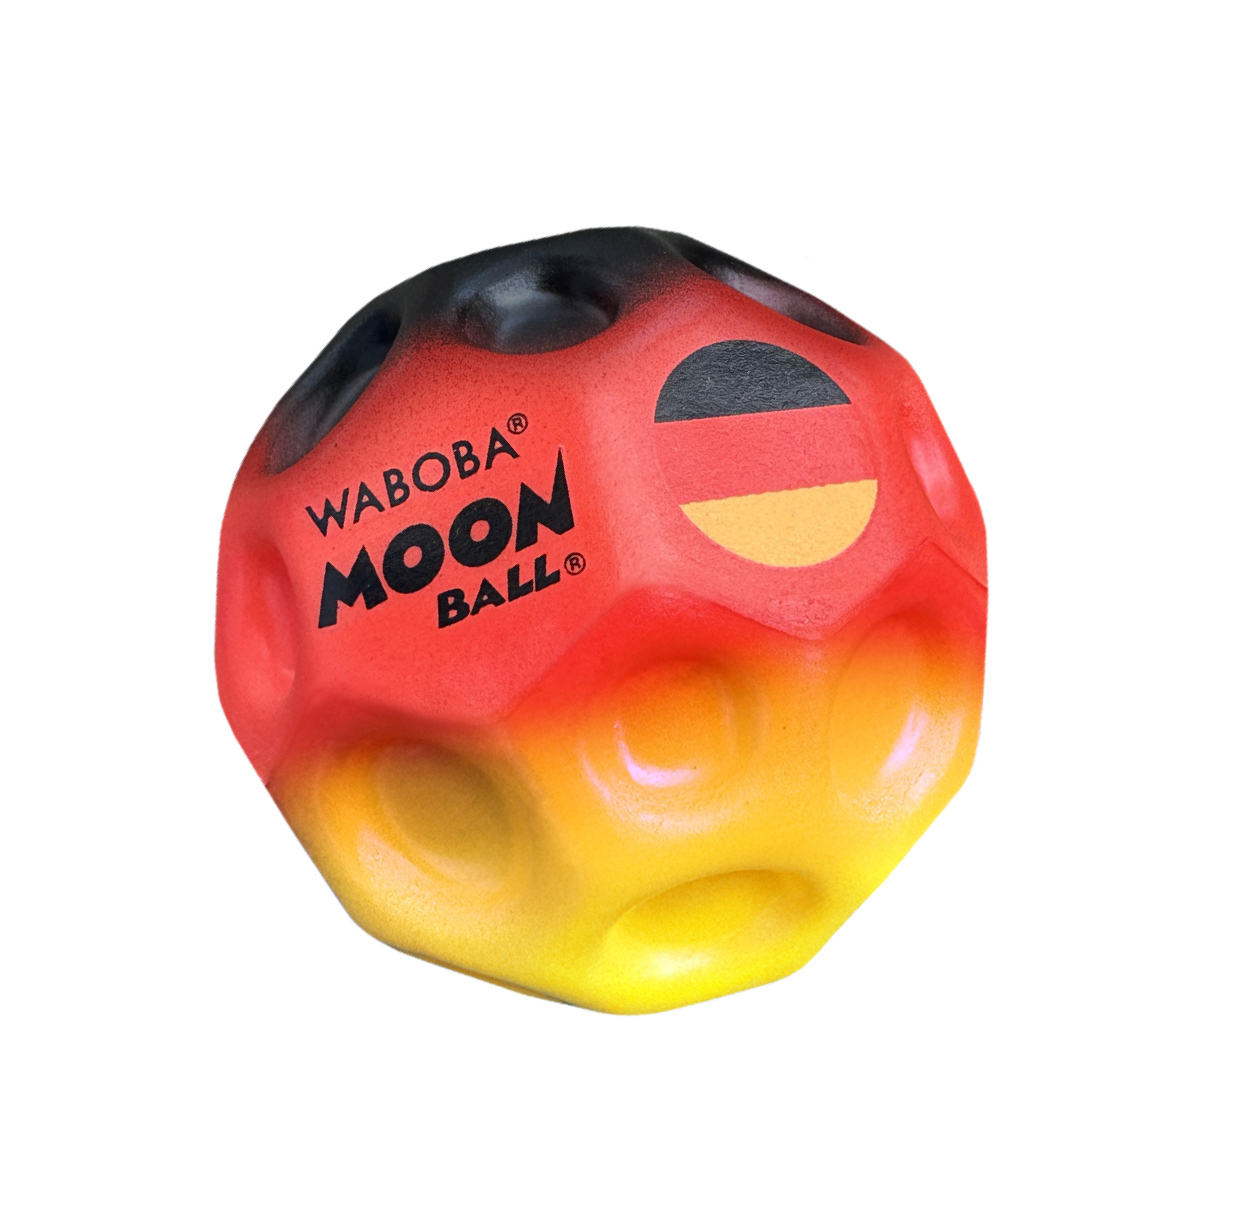 Waboba - MOON Ball "Germany"